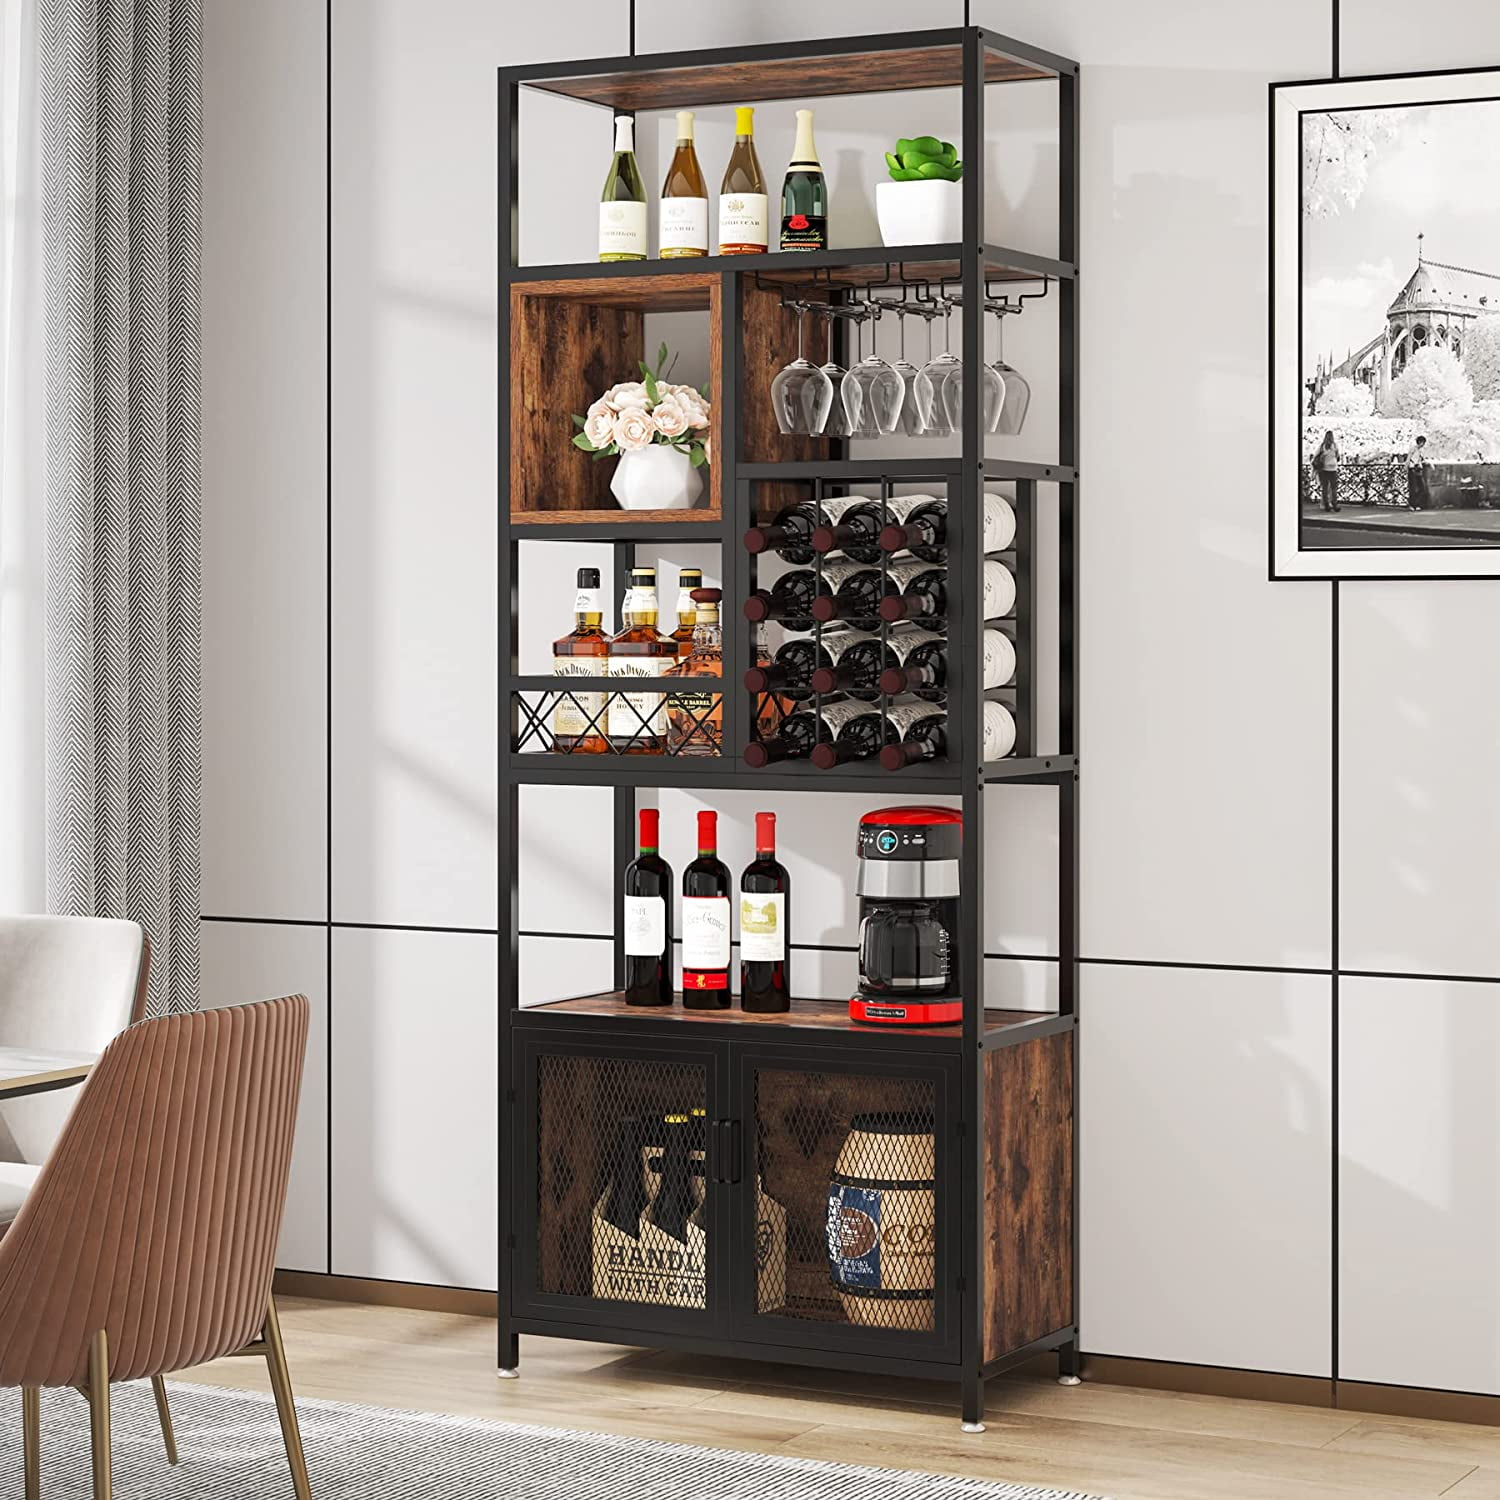 Bar Shelf Home Bar Accessories Wine Rack Wine Bottle Holder Wall